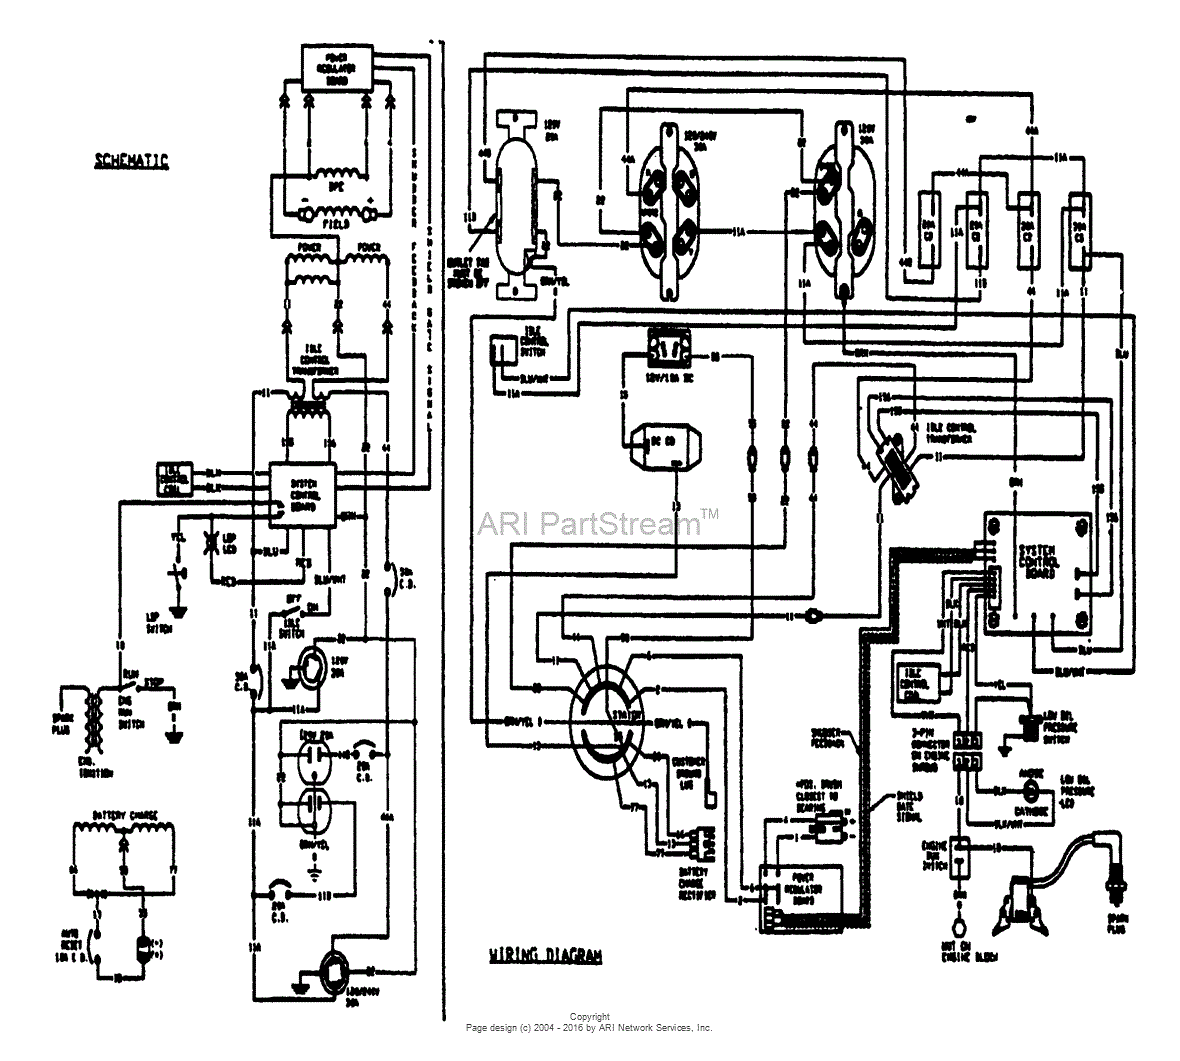 Generac 5500xl Wiring Diagram - Wiring Diagram